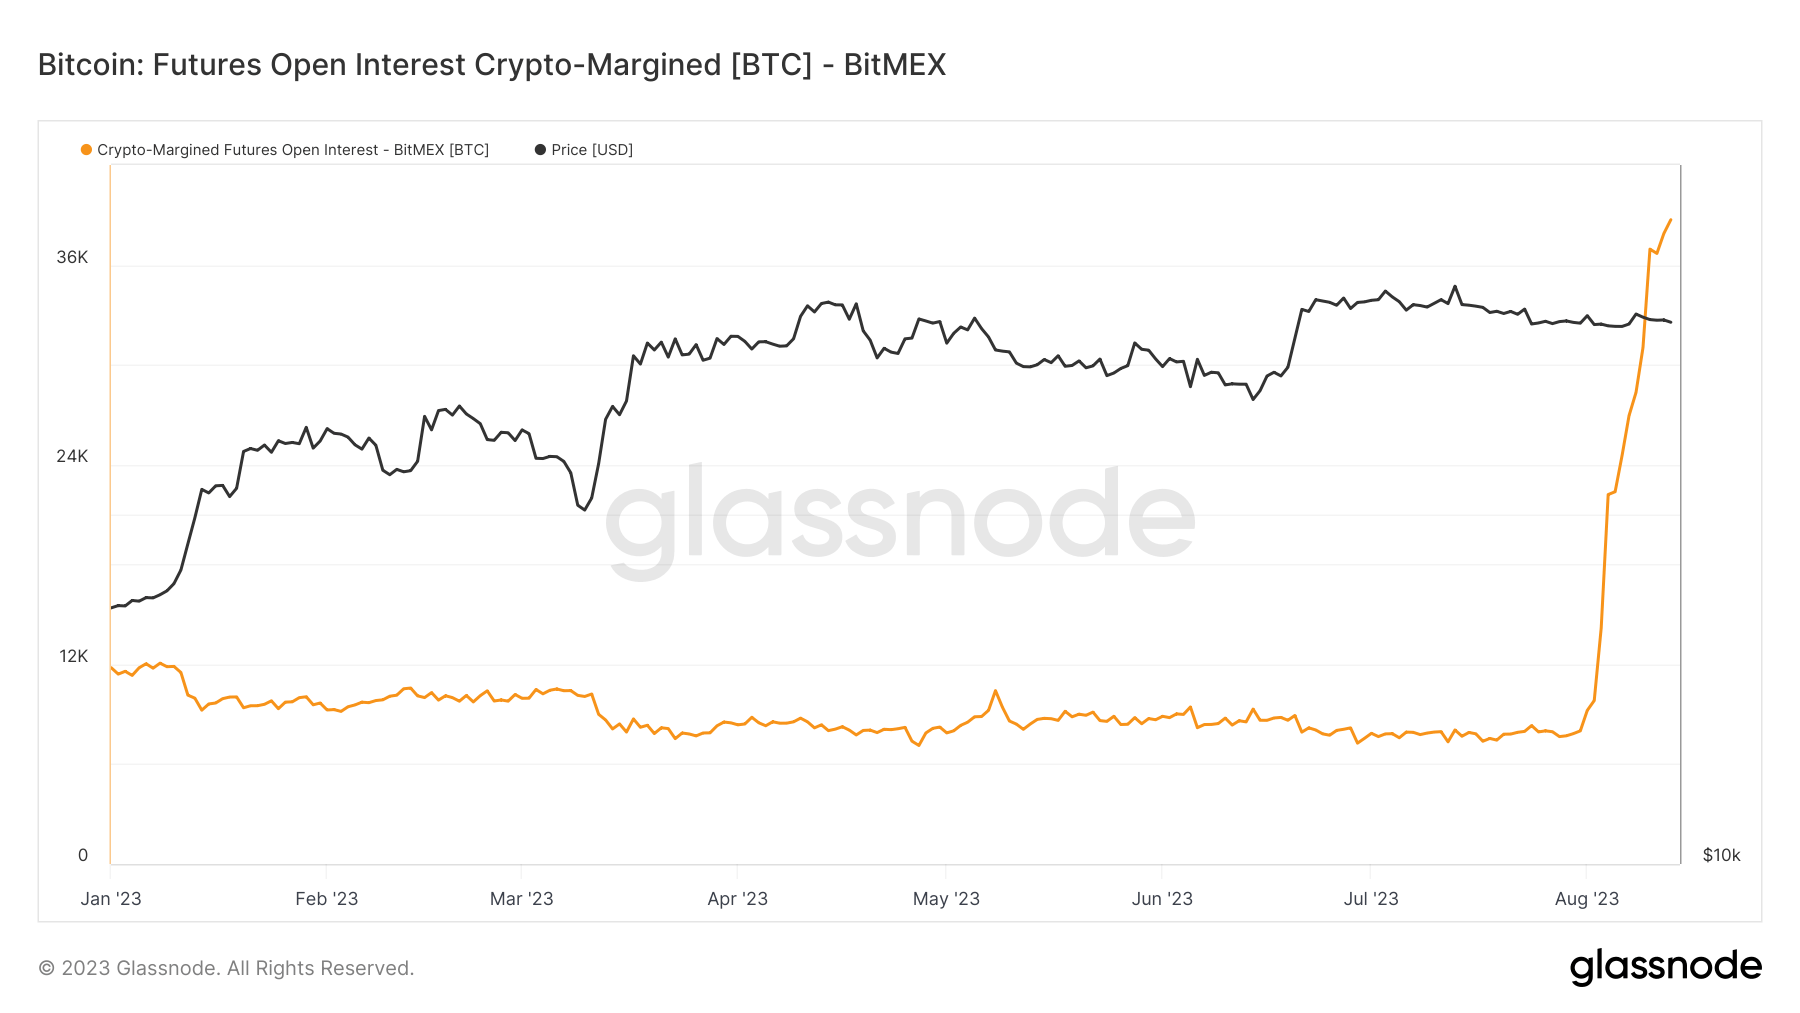 bitmex crypto margined futures open interest ytd